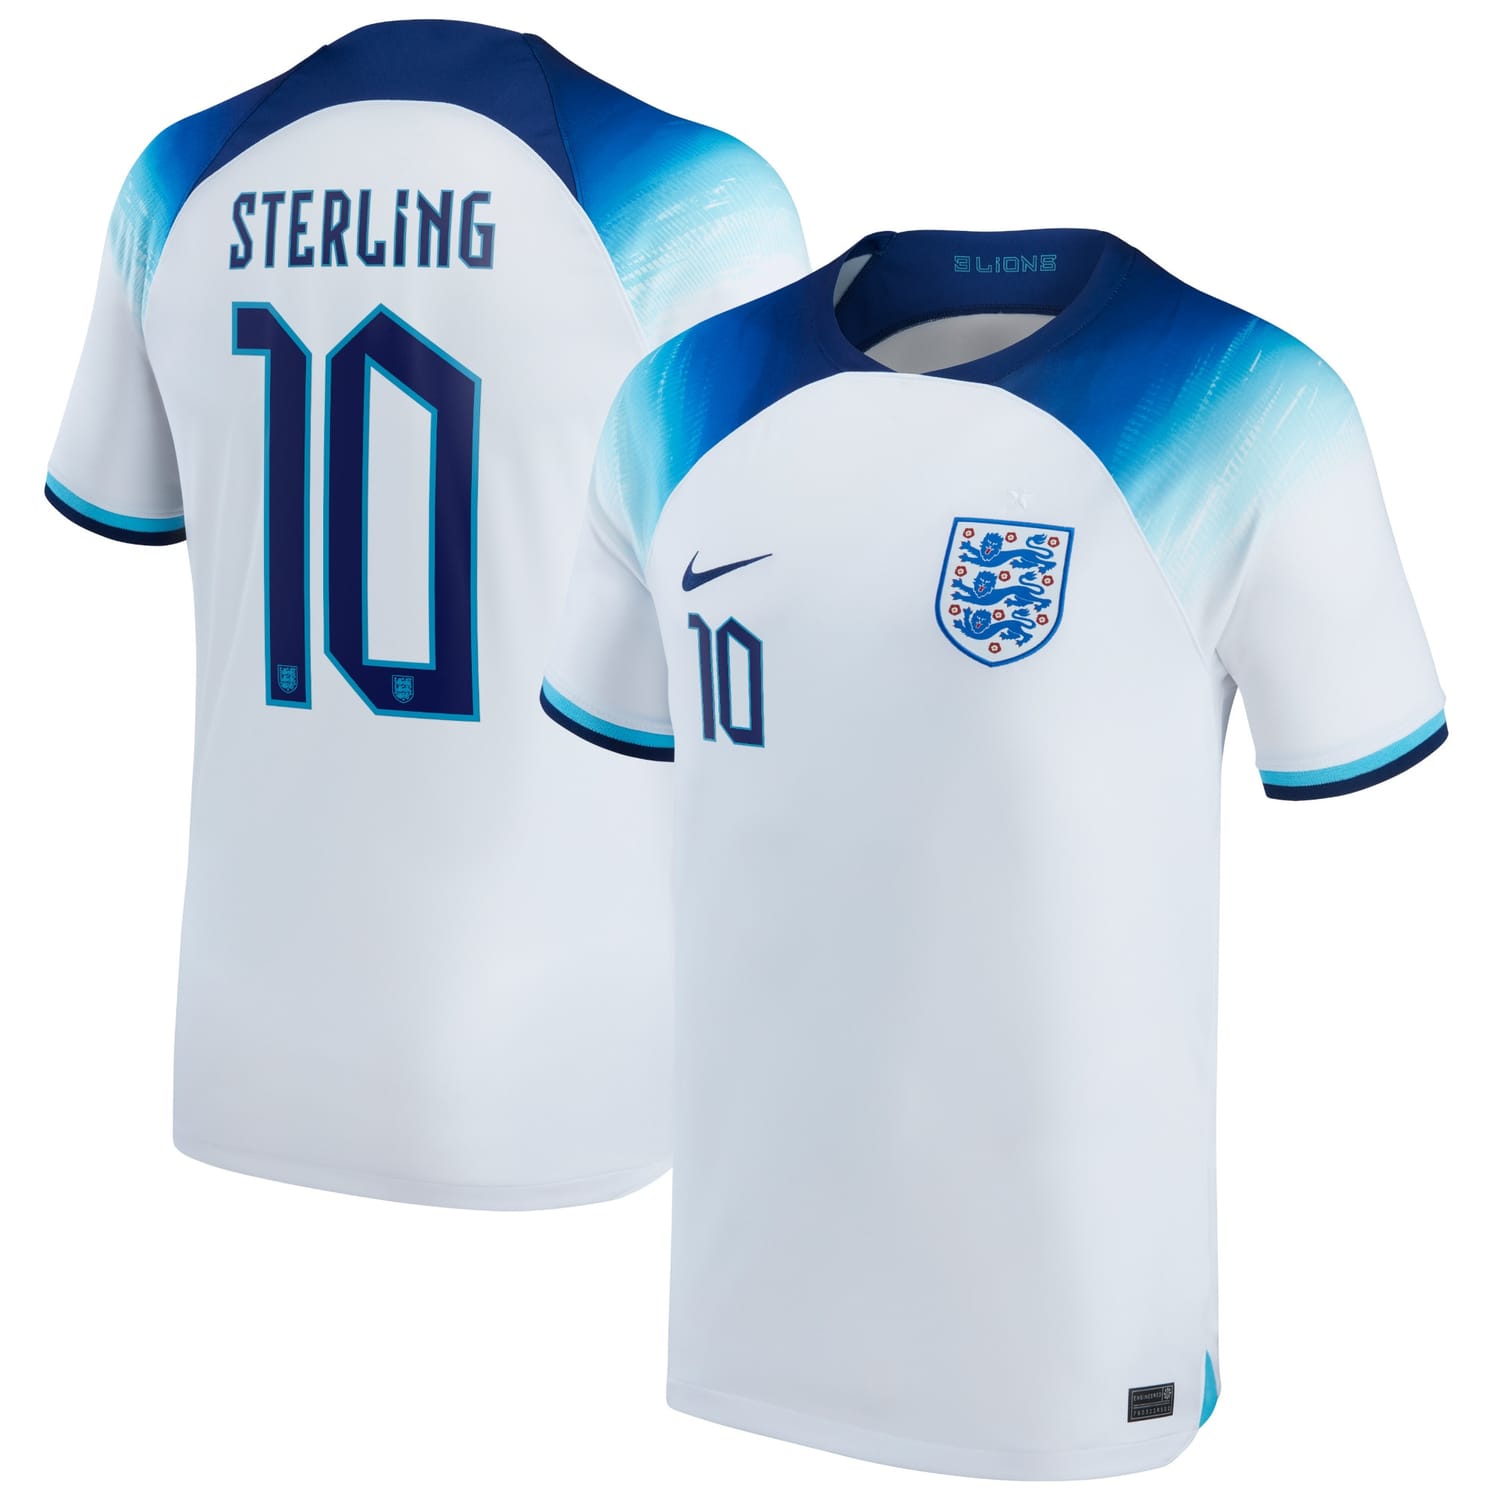 England National Team Home Jersey Shirt 2022 player Raheem Sterling 10 printing for Men